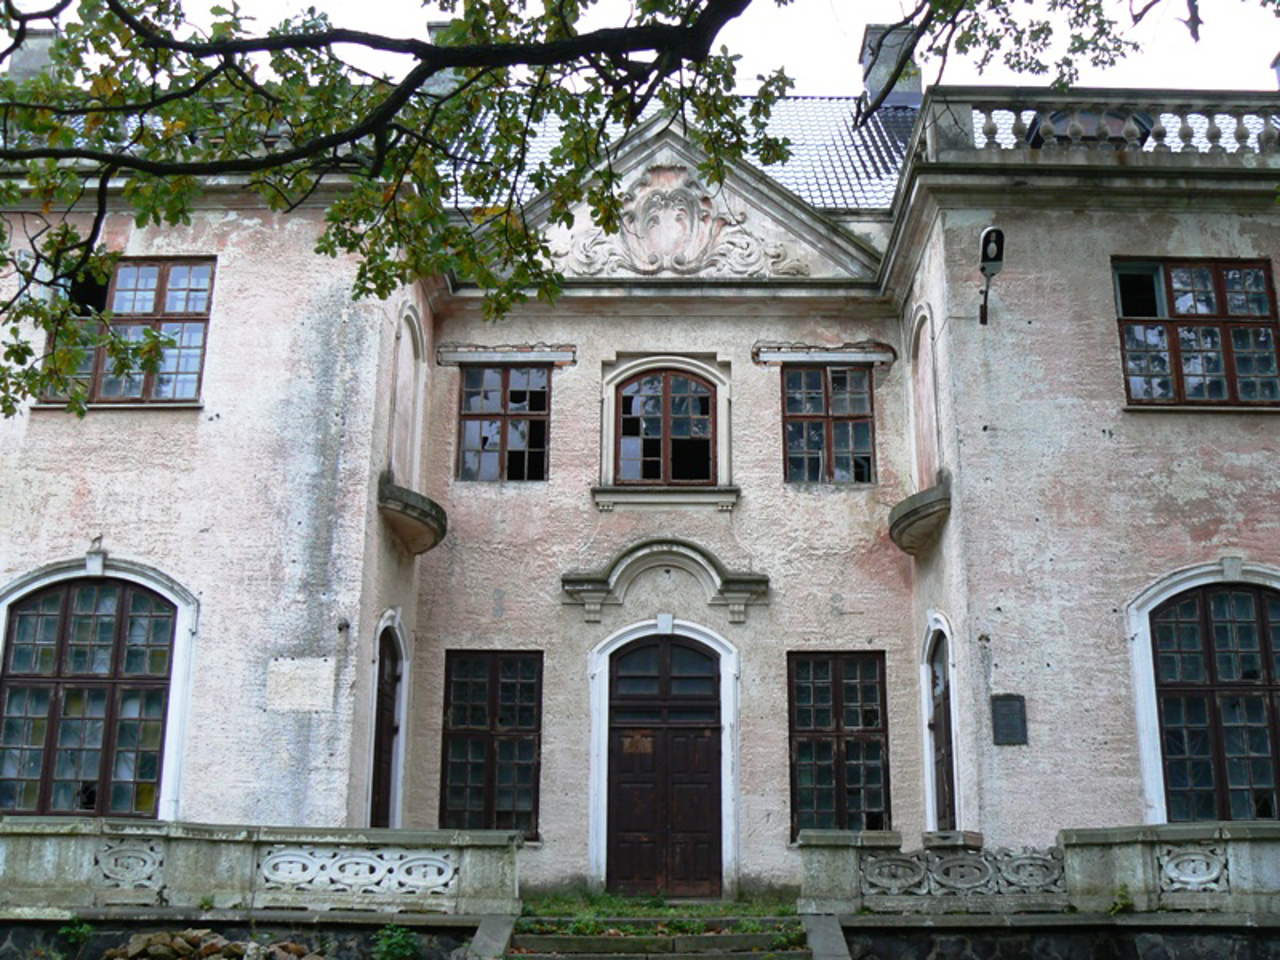 Count Shuvalov's Palace, Talne